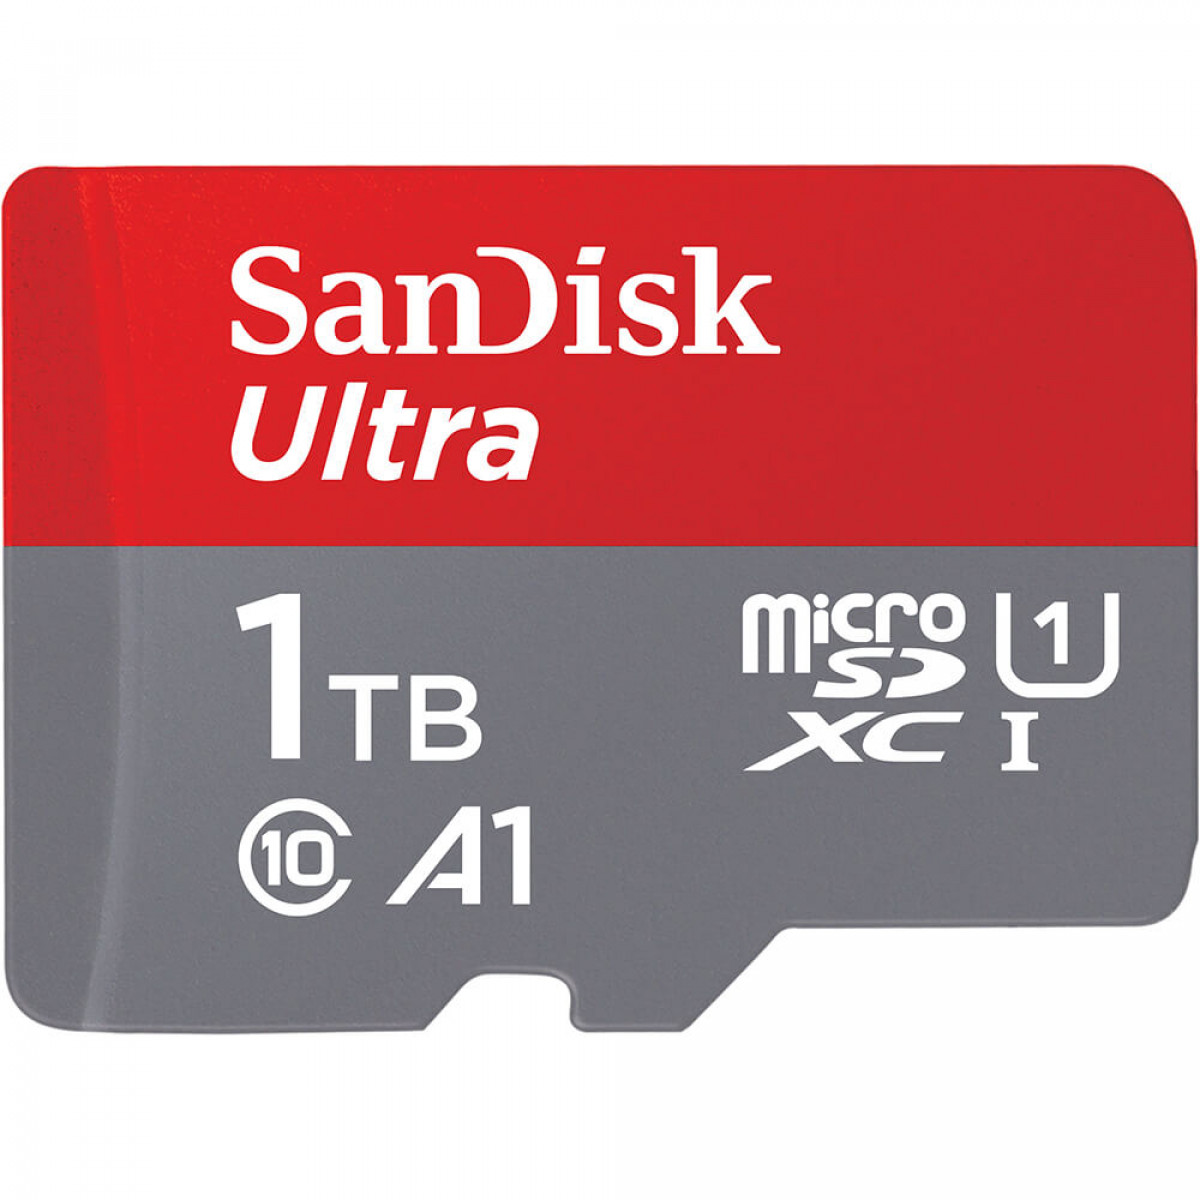 SANDISK 256580, Standard, 1 MB/s 150 TB, Micro-SDXC